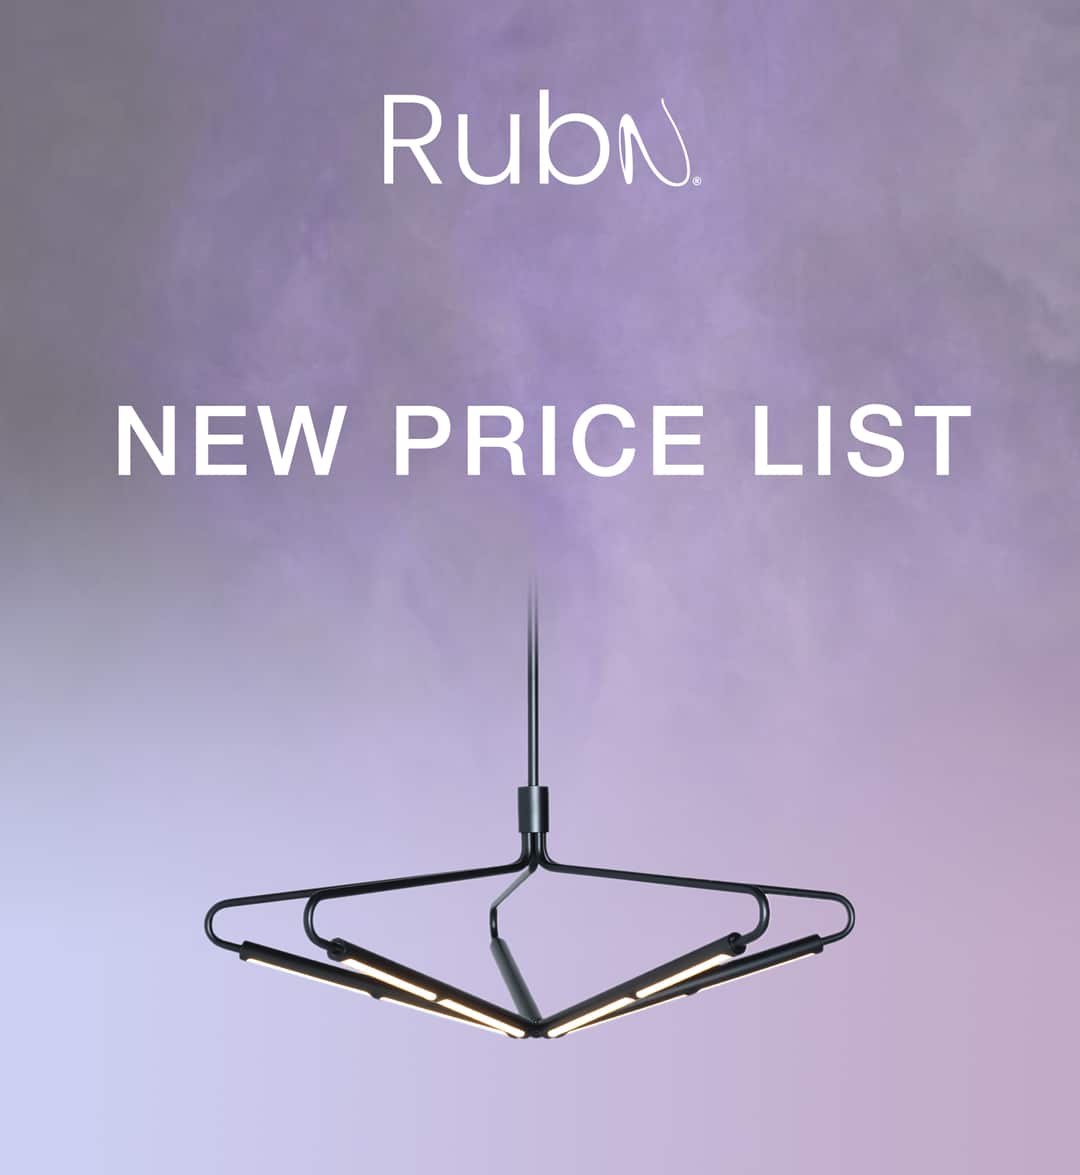 New Price List, RUBN